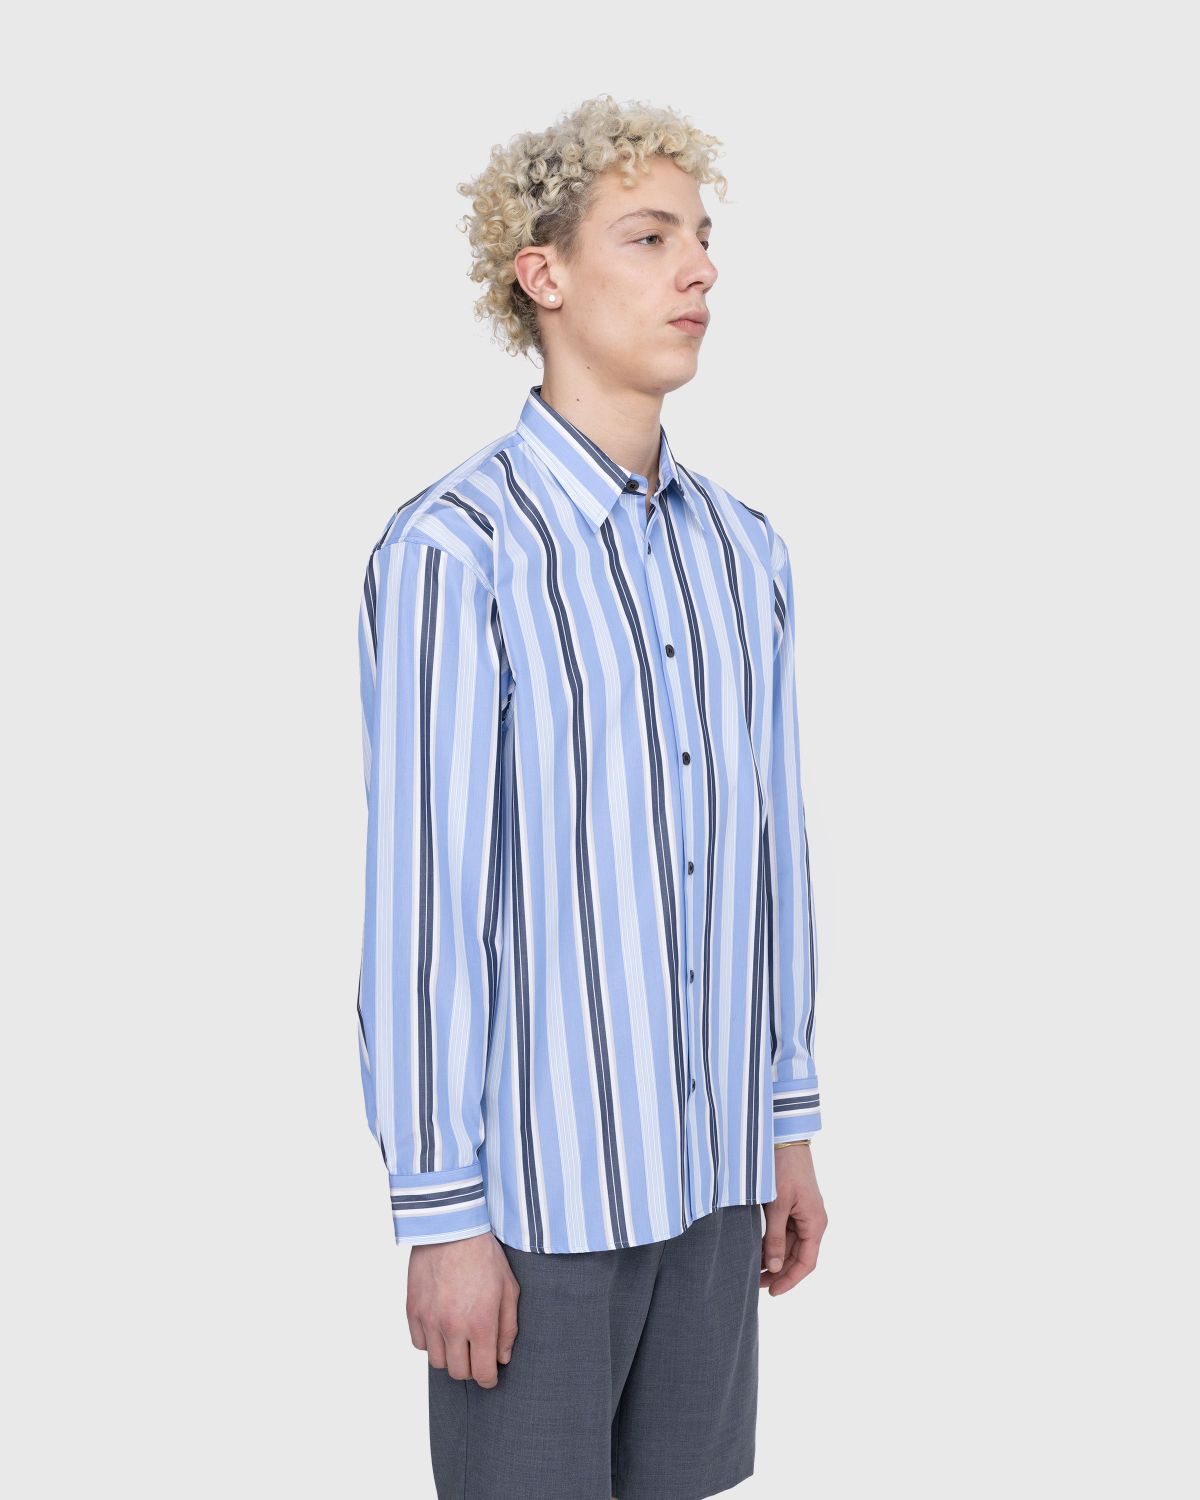 Dries van Noten – Croom Shirt Striped Blue - Longsleeve Shirts - Blue - Image 4